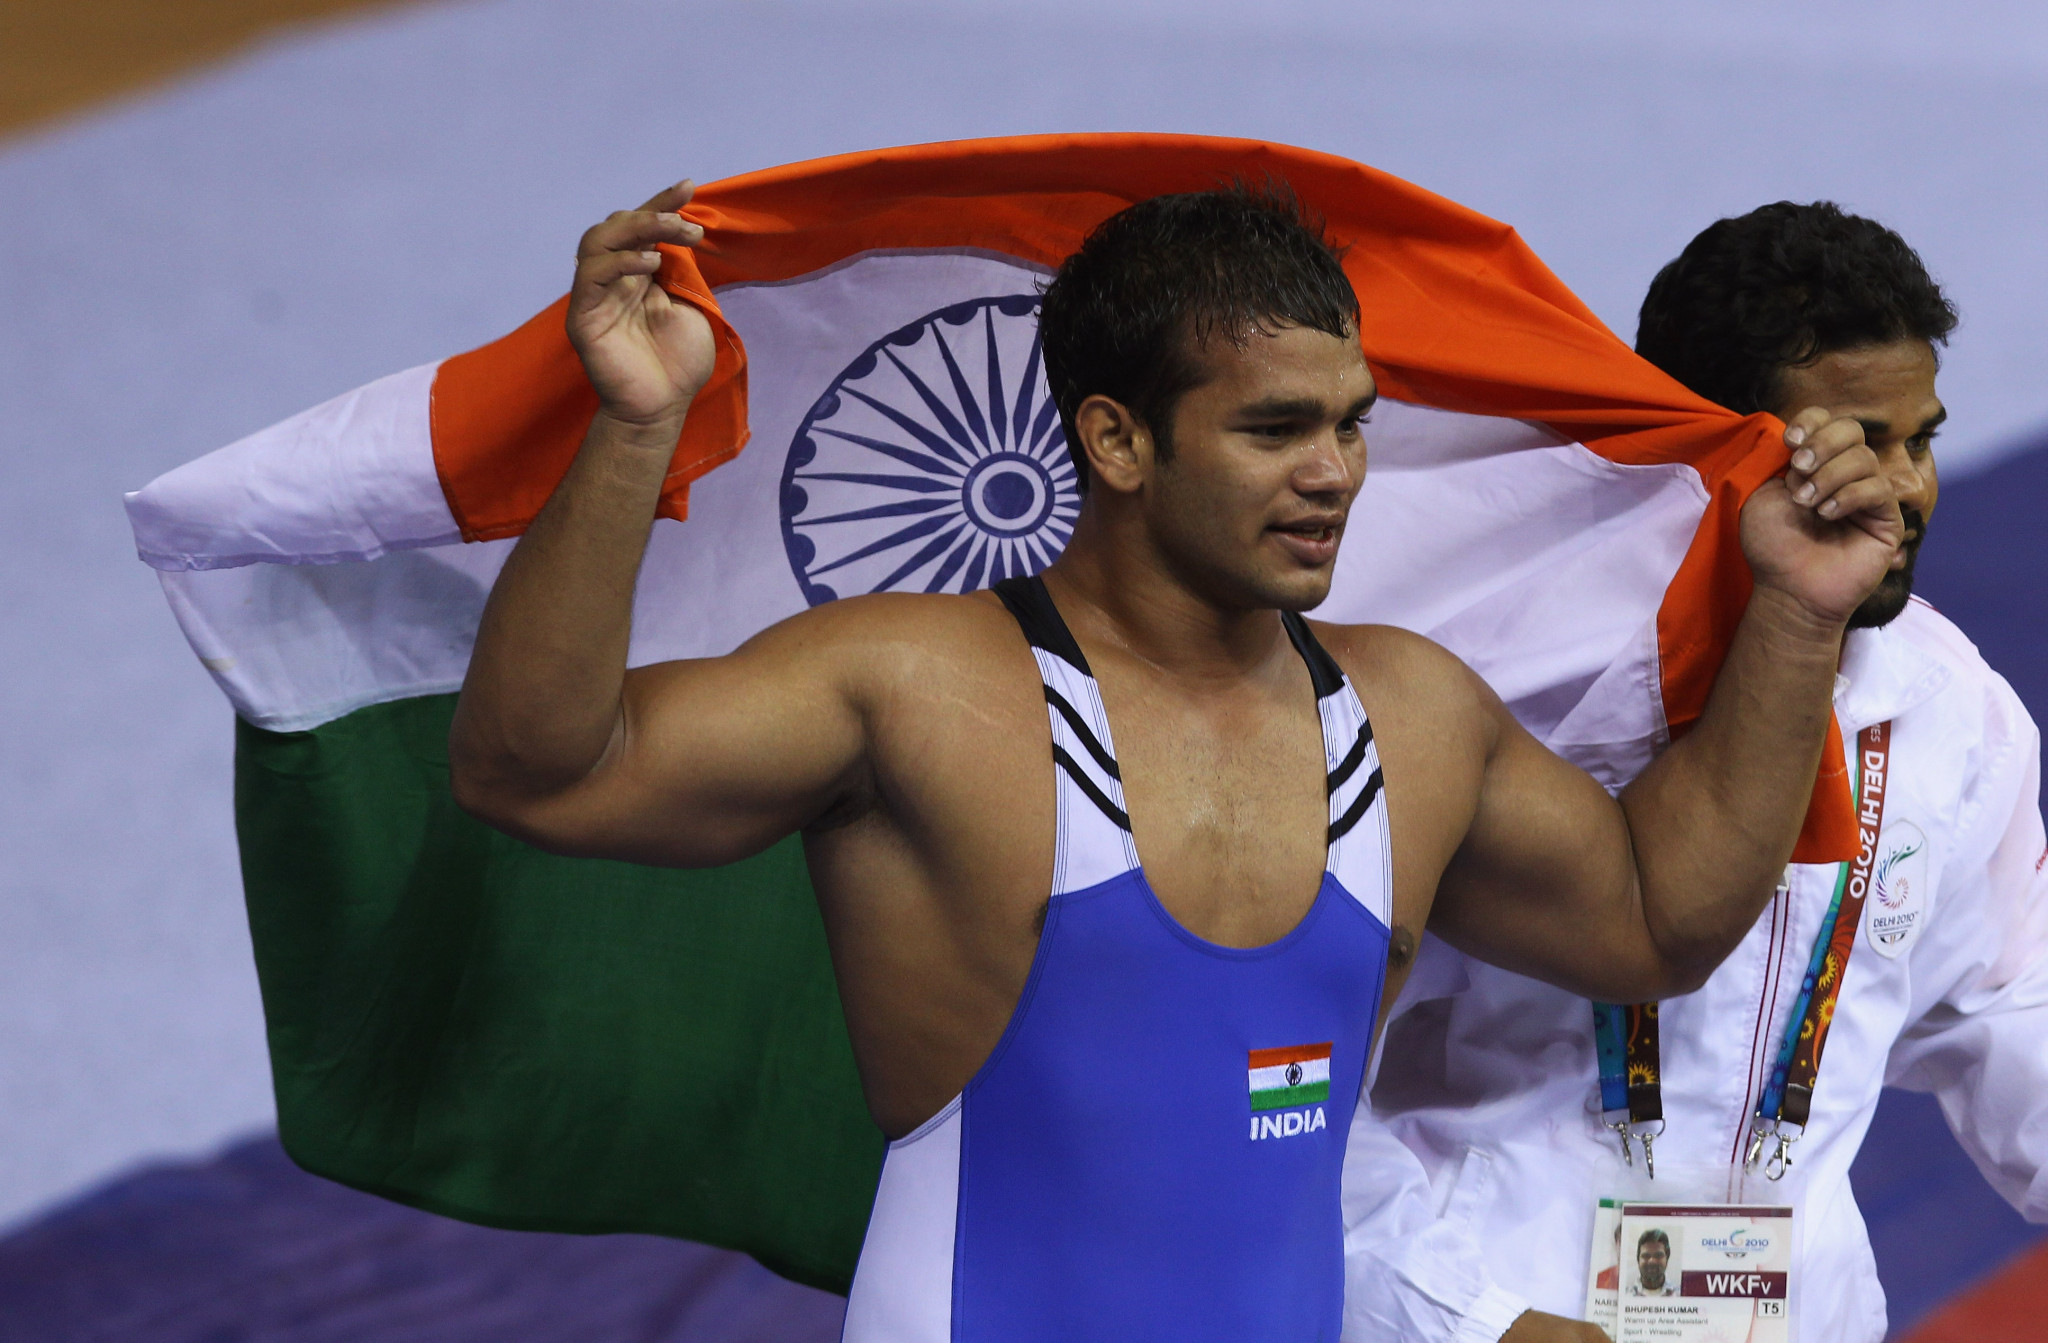 Dehli High Court urges quick completion of investigation into banned Indian wrestler Yadav